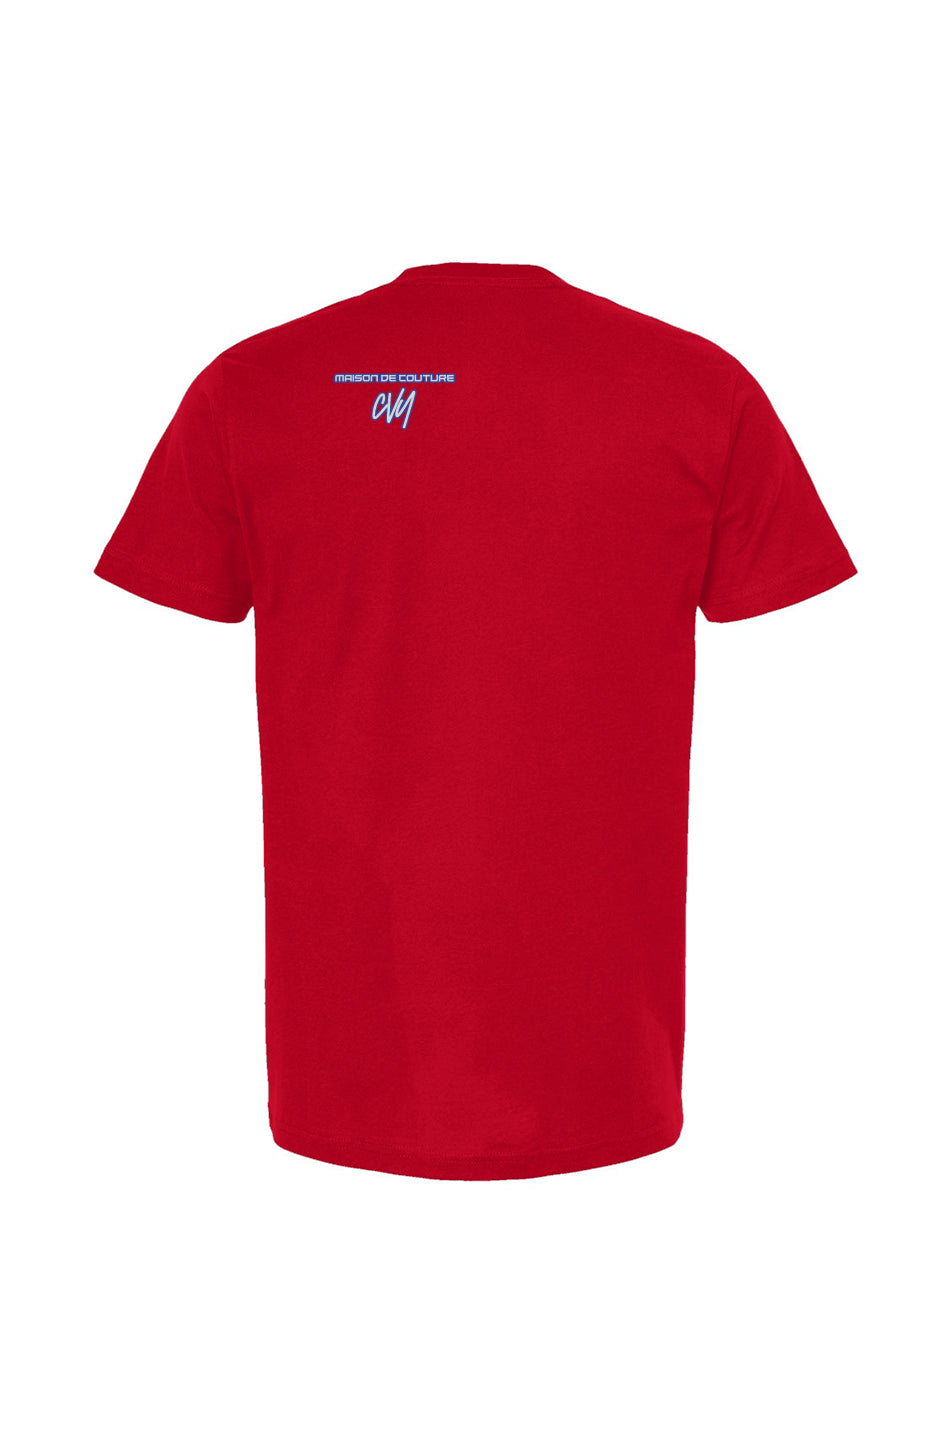 GS - Red Unisex T Shirt